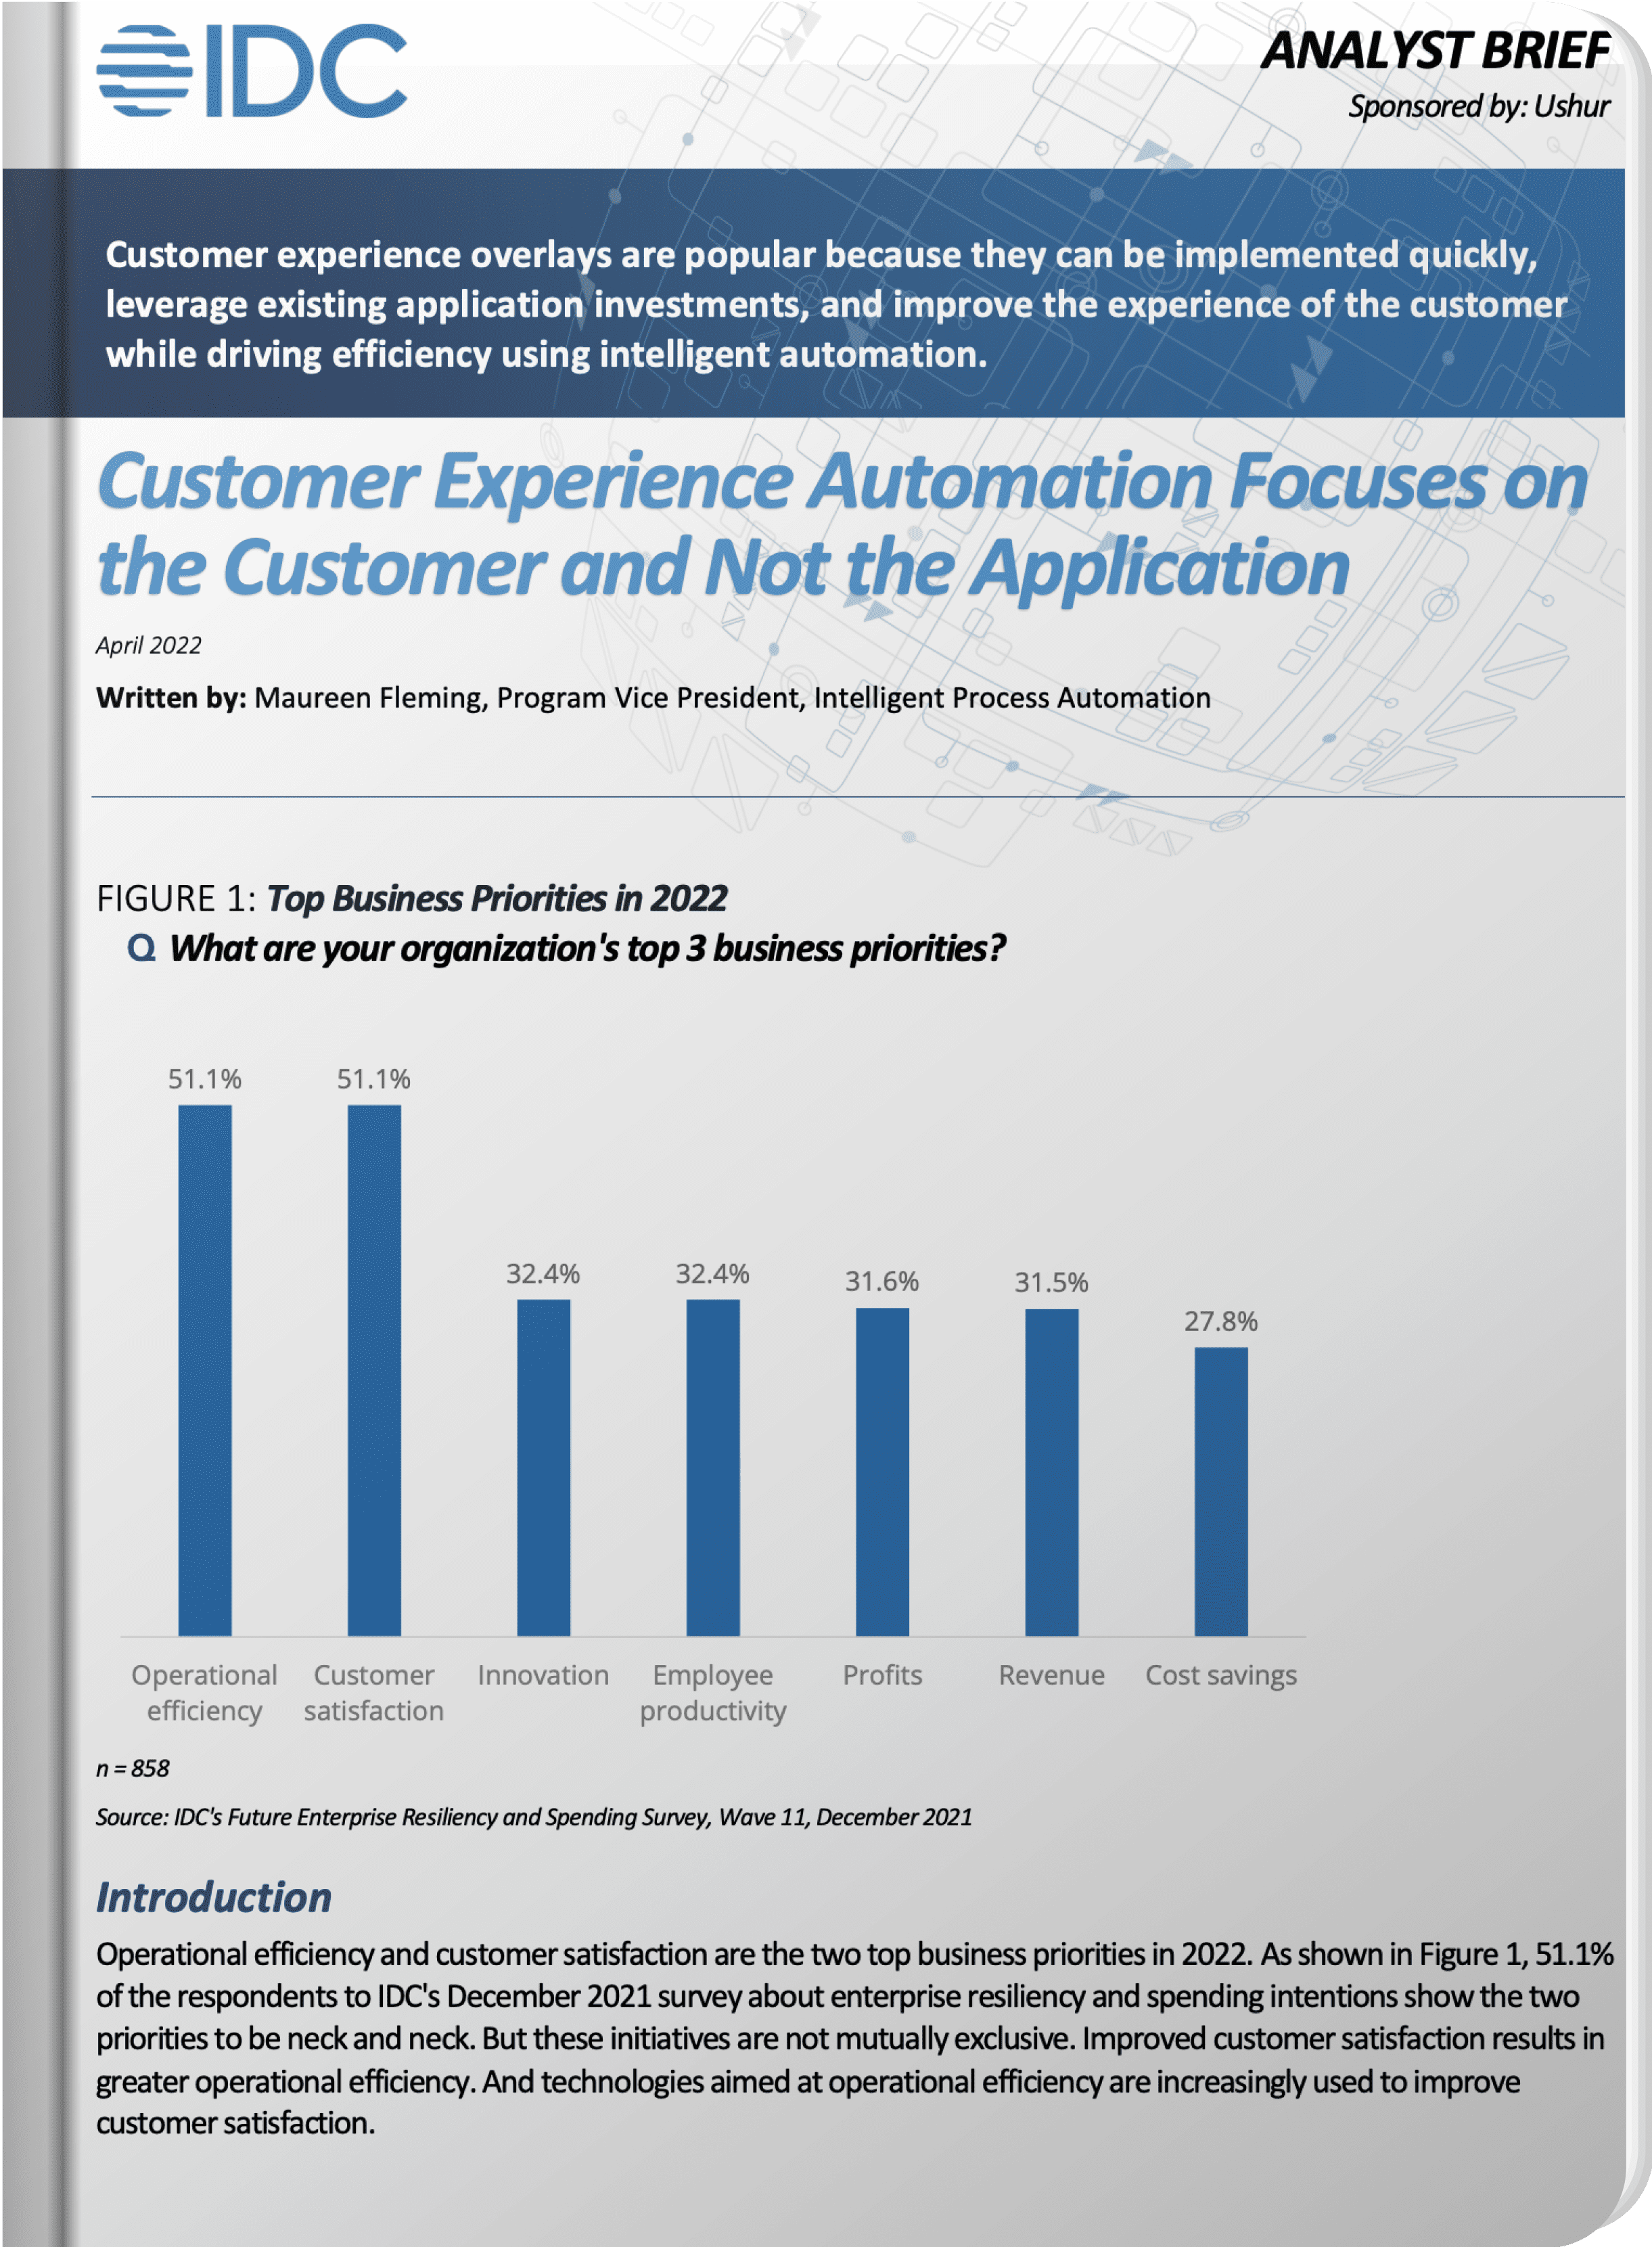 IDC’s CXA Focuses on the Customer, not the Application asset image